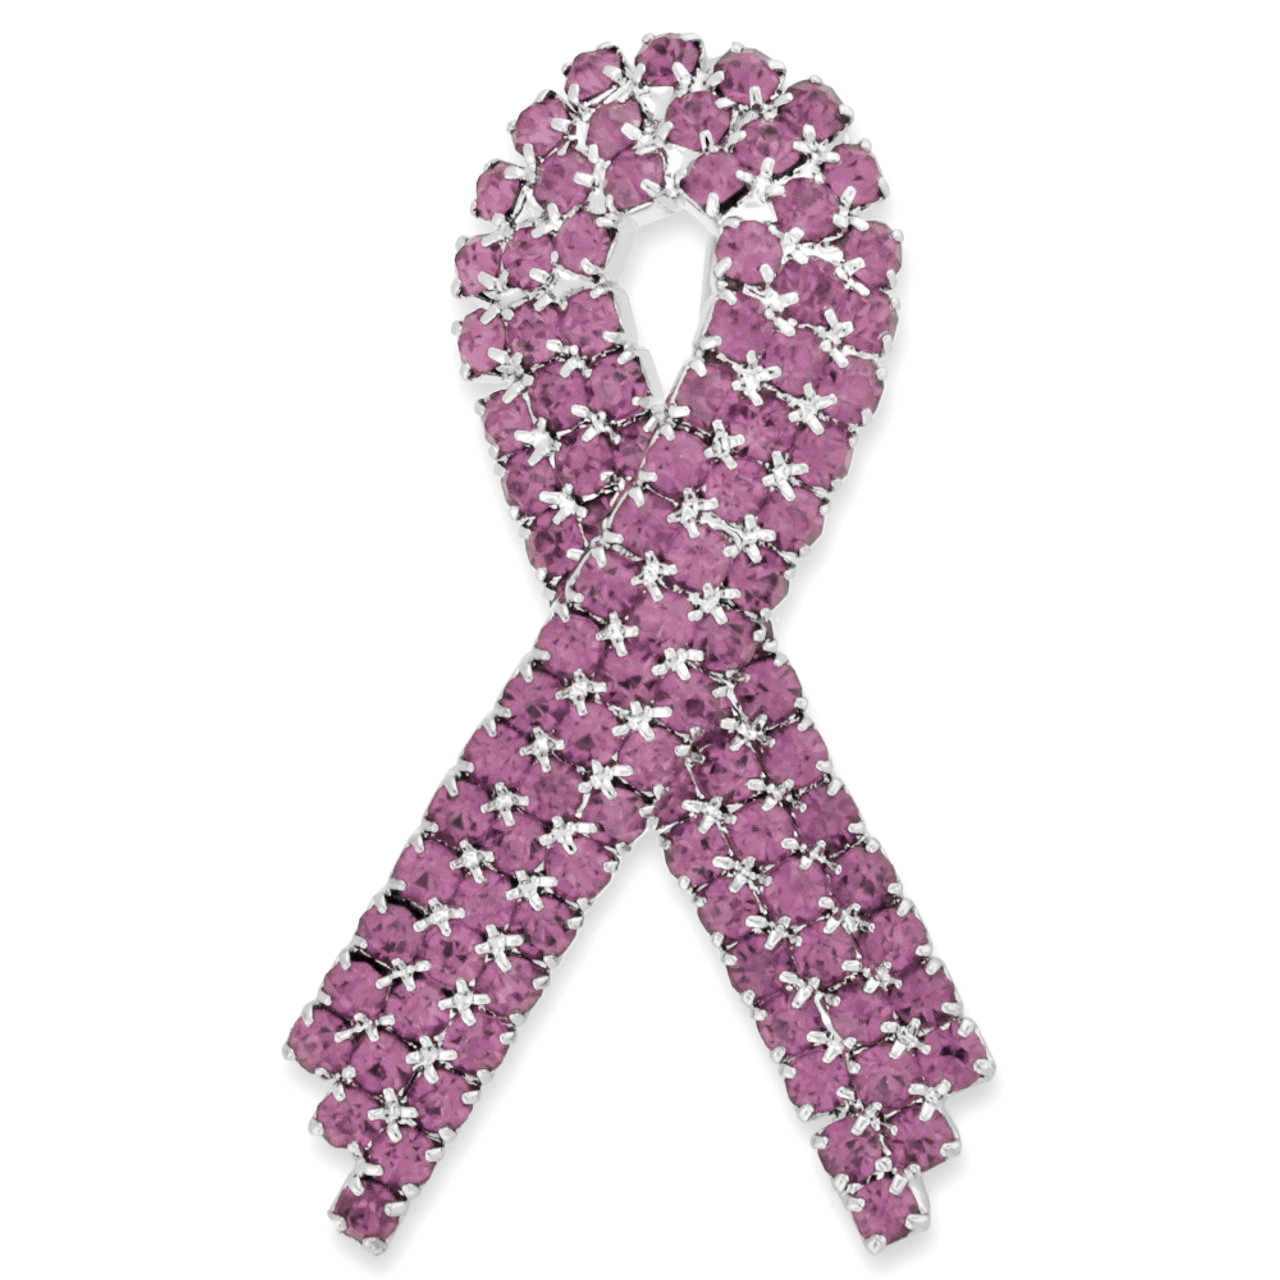 Awareness Ribbon Pin - Breast Cancer | Pink | Breast Cancer Awareness Pins by PinMart